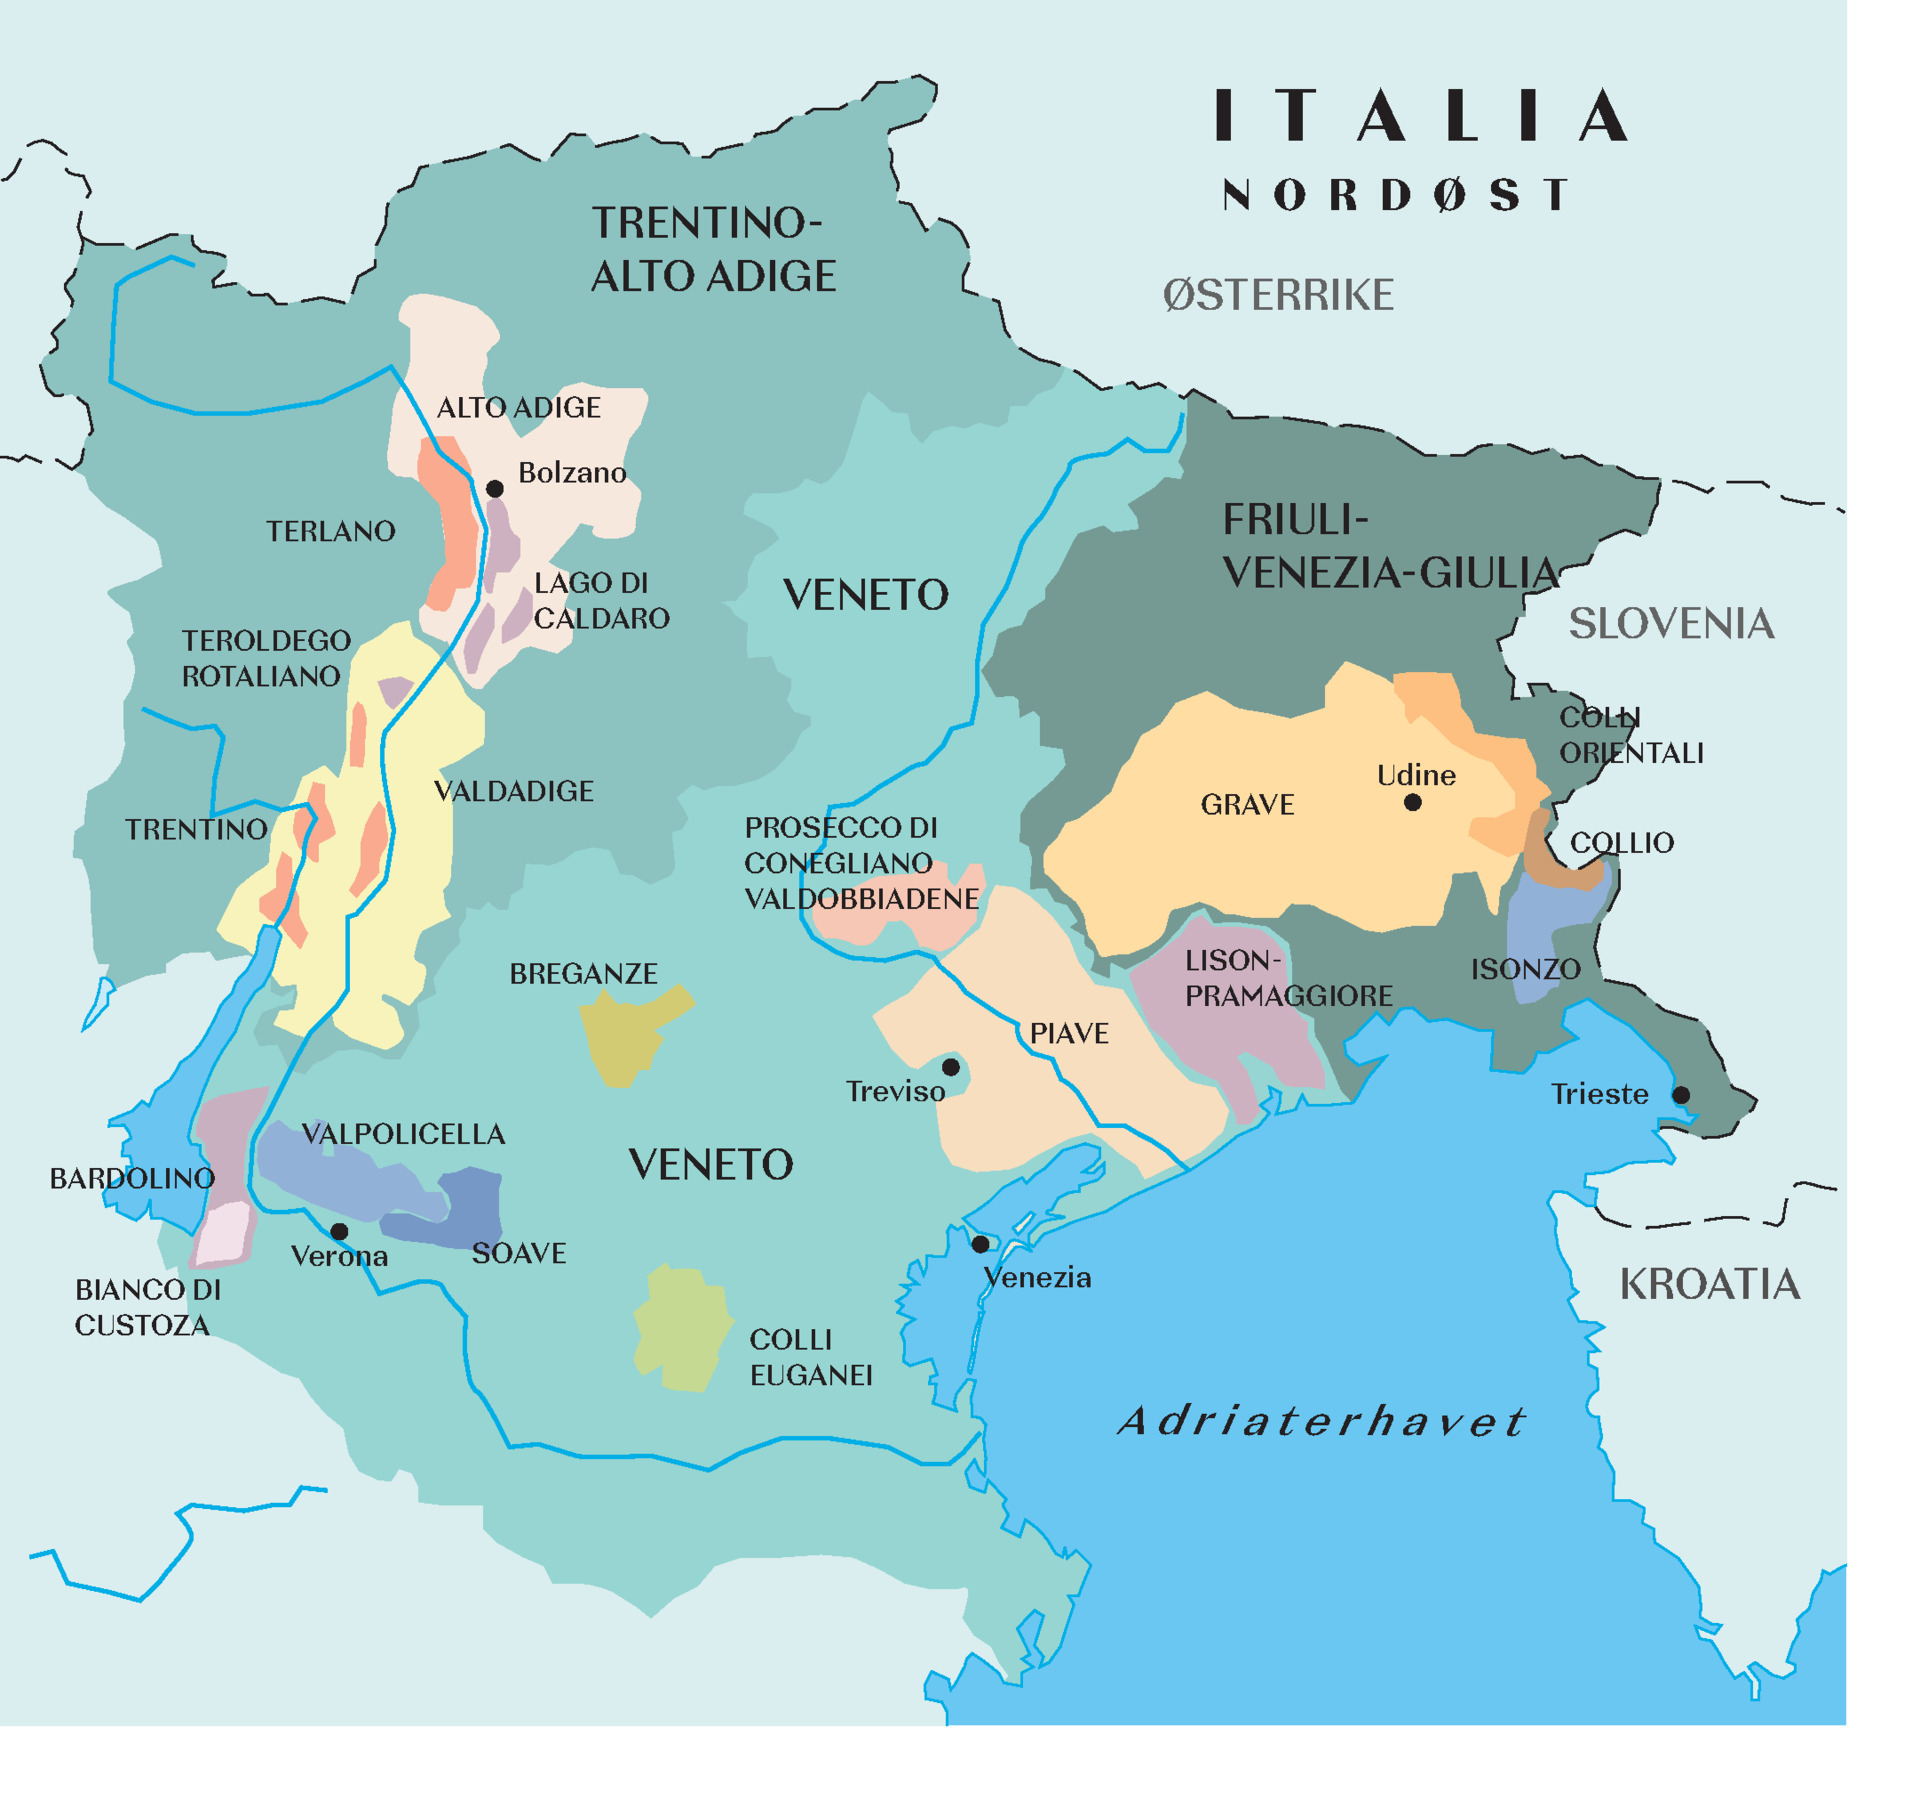 Kart over vinregionene nordøst i italia.